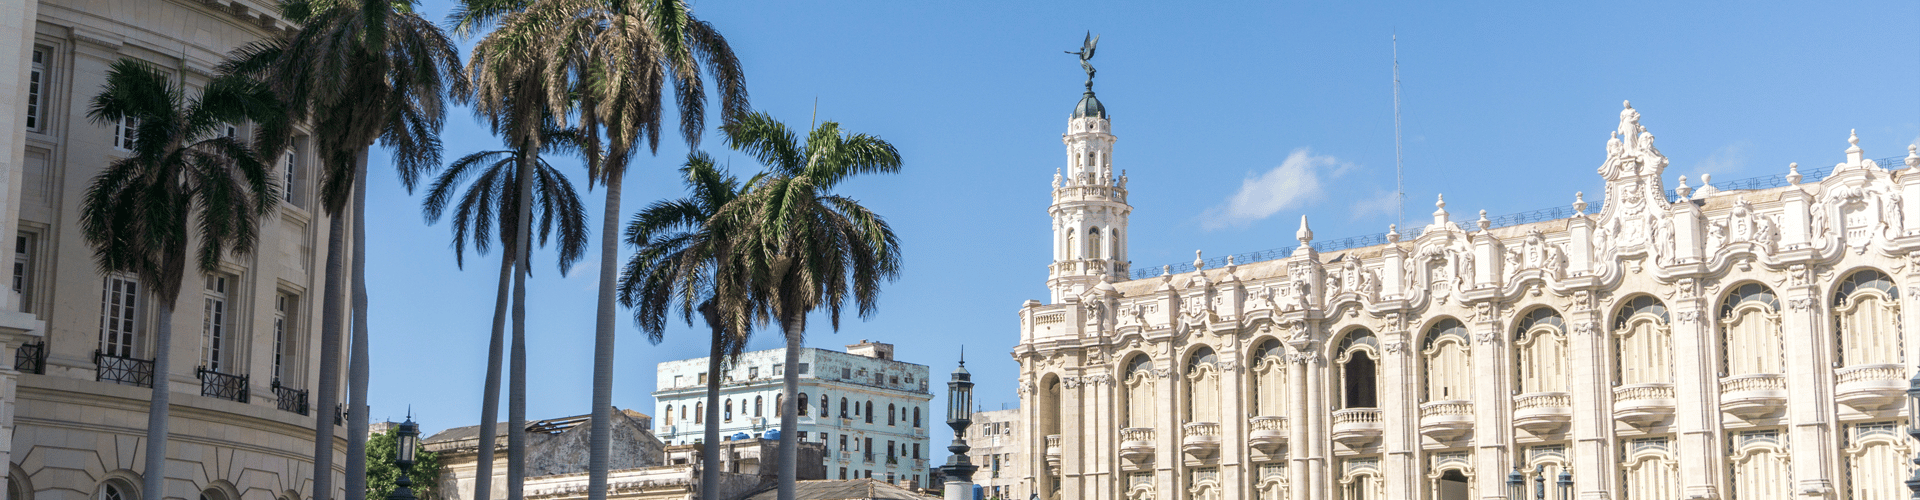 Essential Free Tour Havana Banner